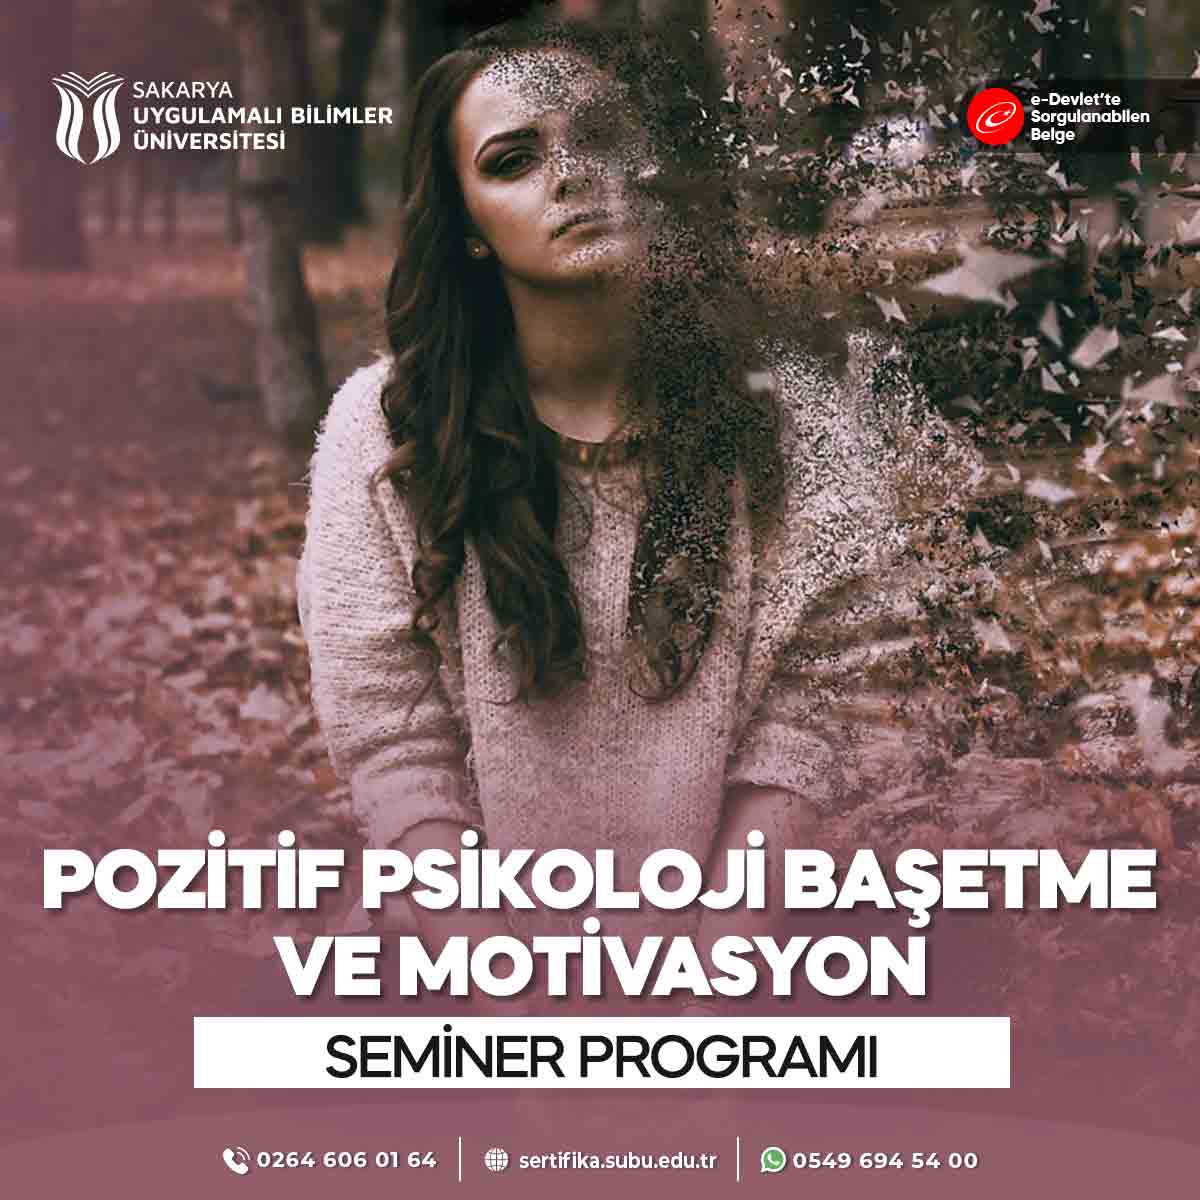 Pozitif Psikoloji Başetme ve Motivasyon Semineri